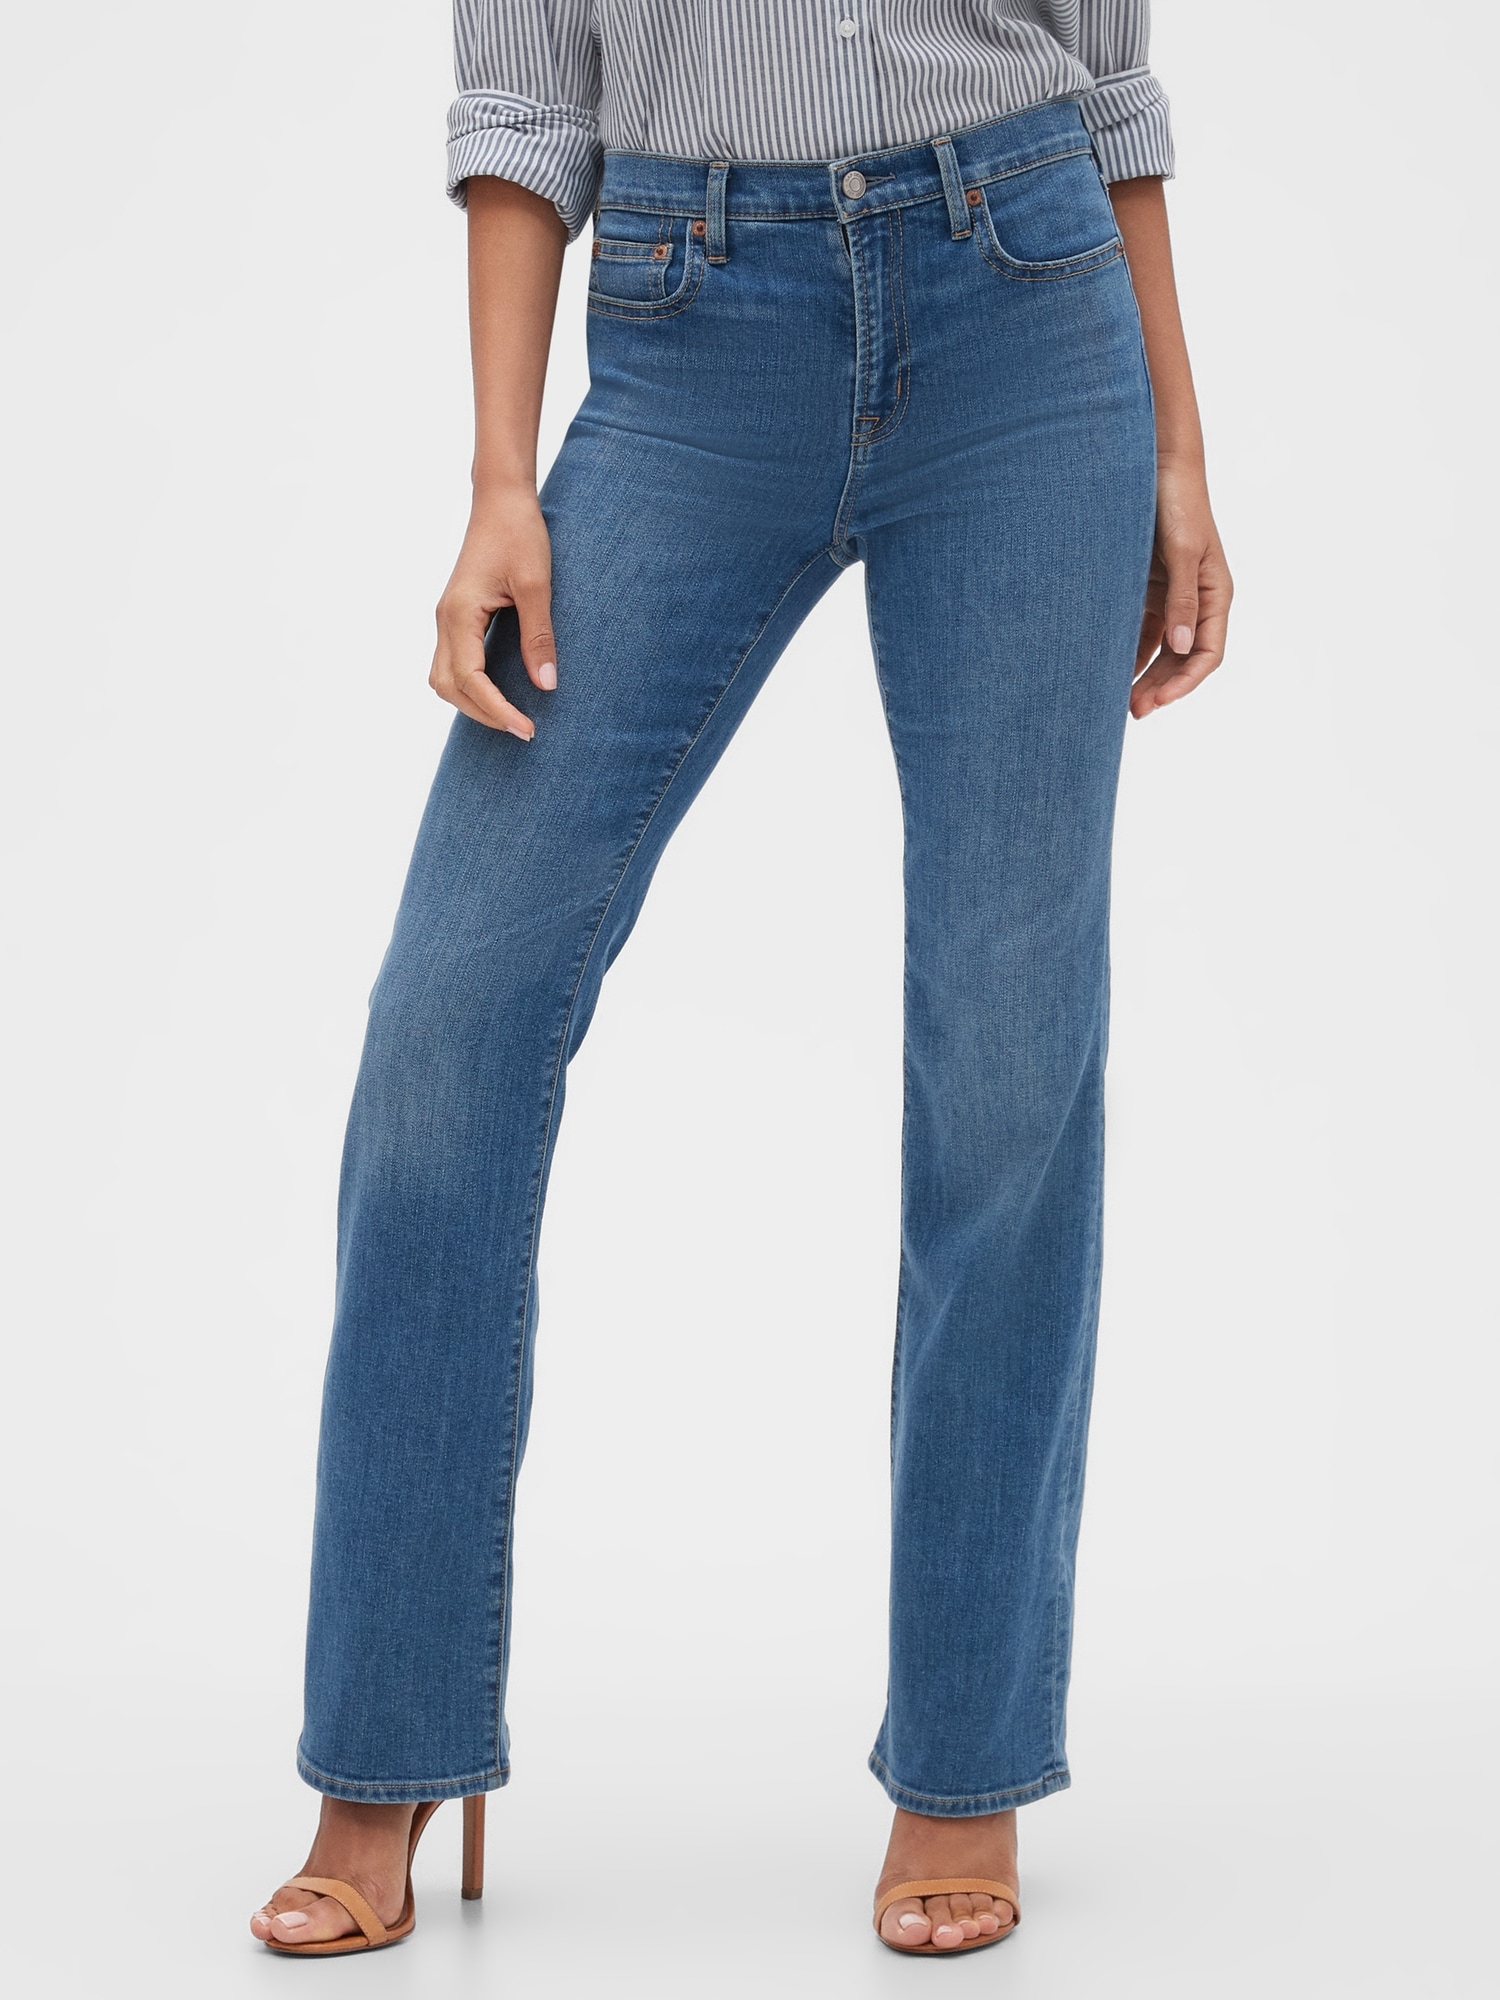 Gap Jeans mid rise universal legging jeans